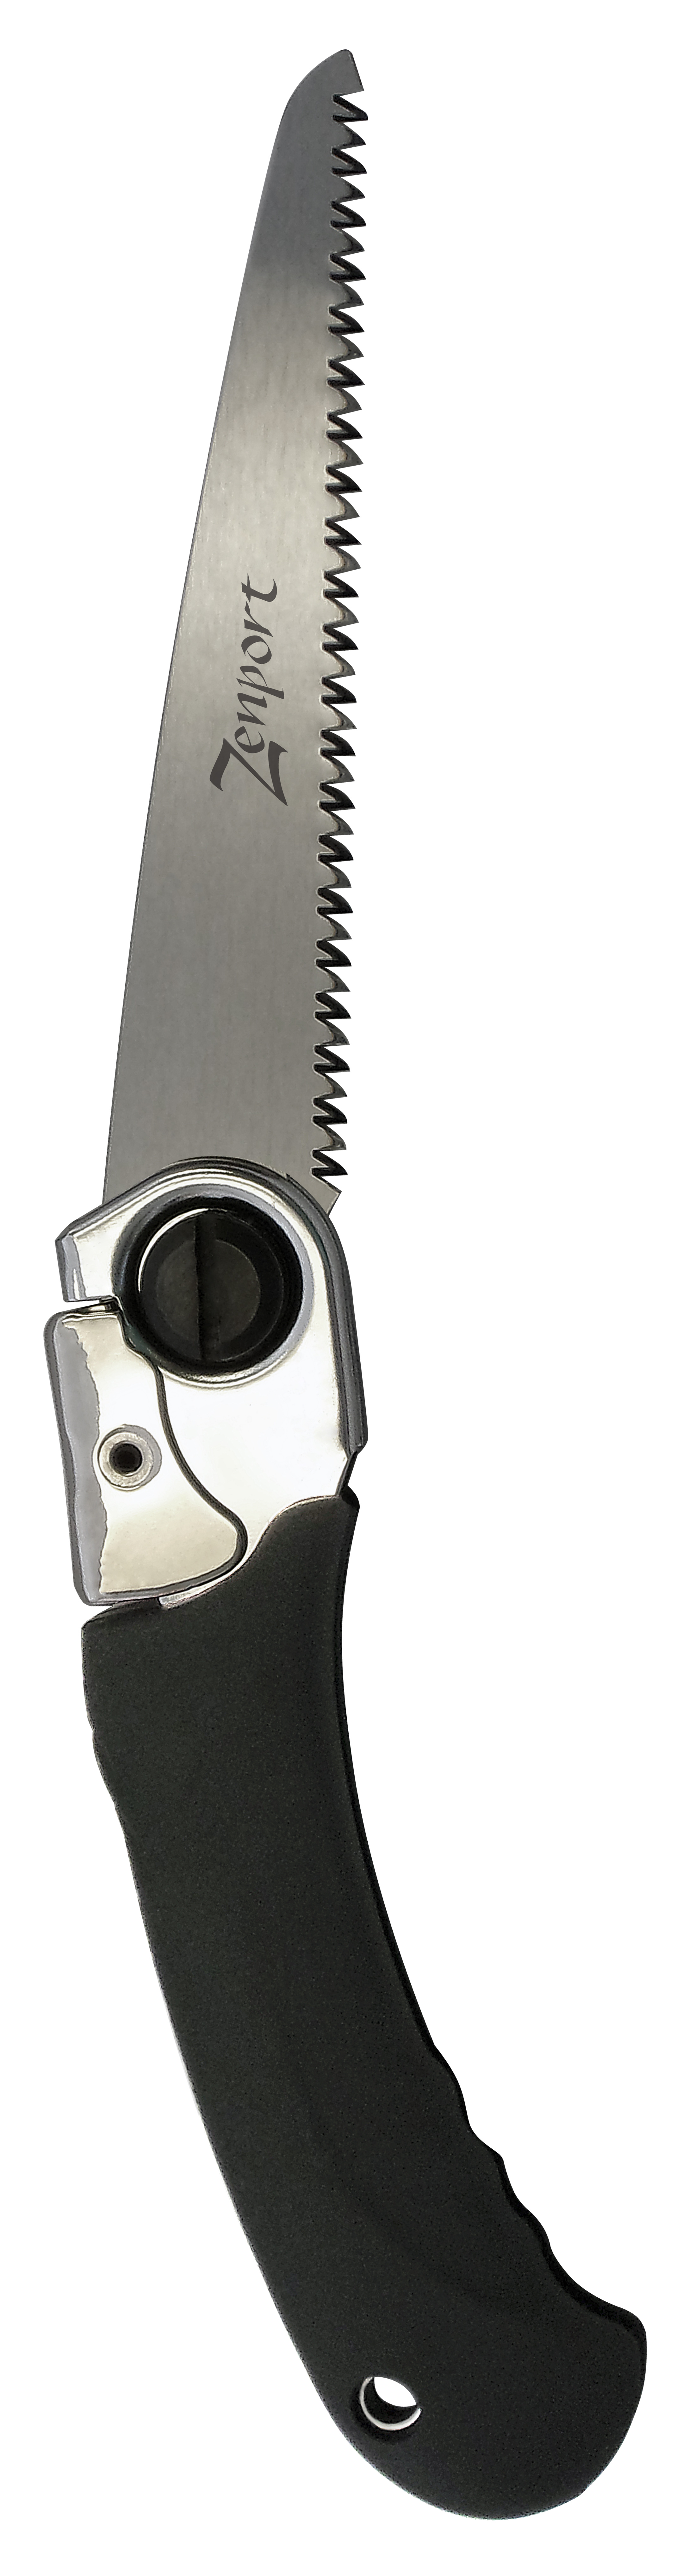 Zenport Sierra sf130, sierra plegable de 5 pulgadas, pocket boy, sierra de podar, tri-filo, acero japonés sk5, mango de metal